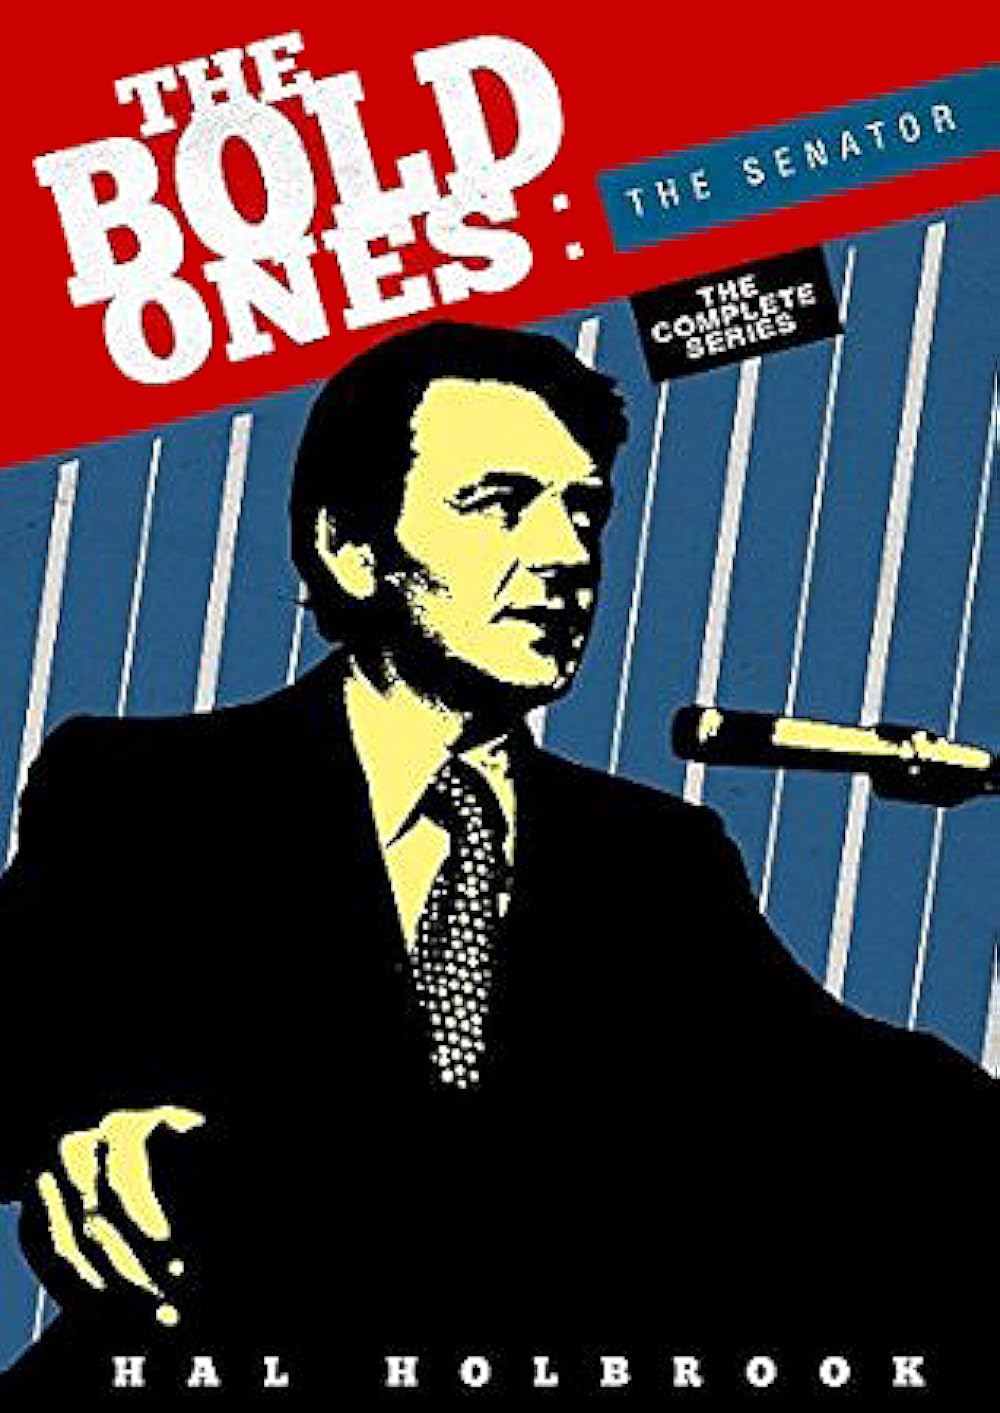 The Bold Ones: The Senator (1970)